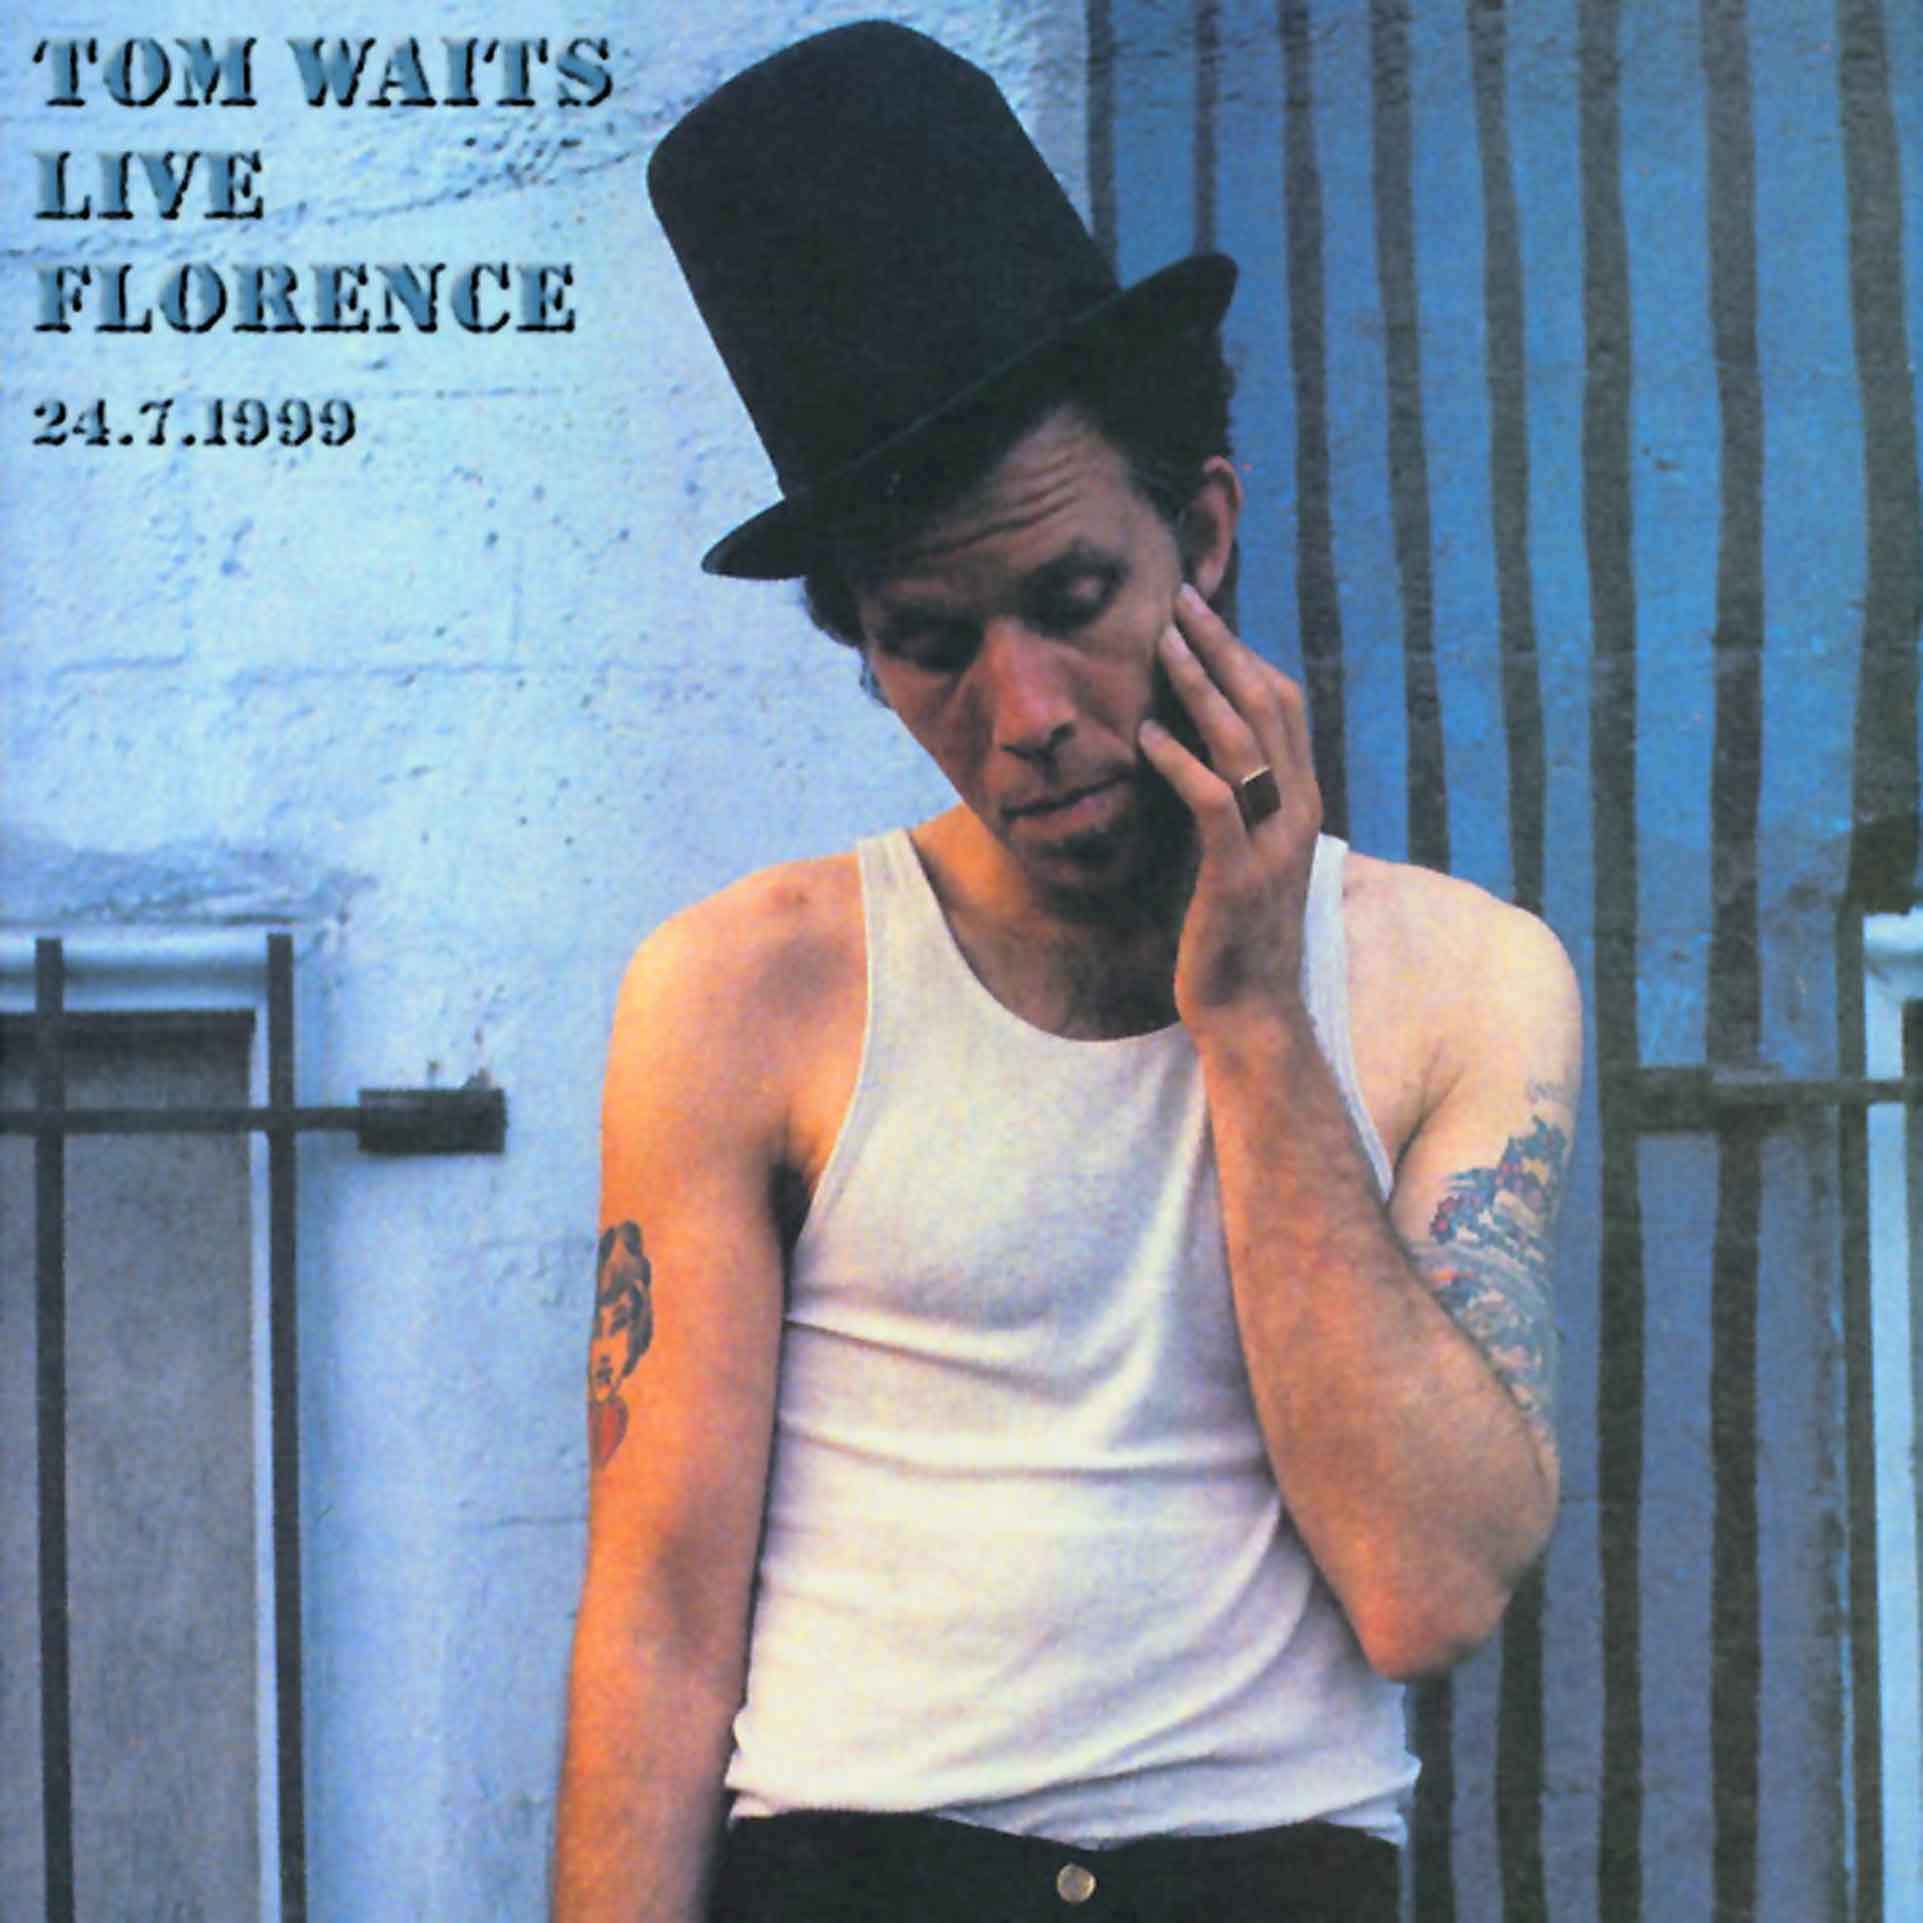 Tom was waiting. Том Уэйтс. Том Уэйтс в молодости. Том Уэйтс с женой.